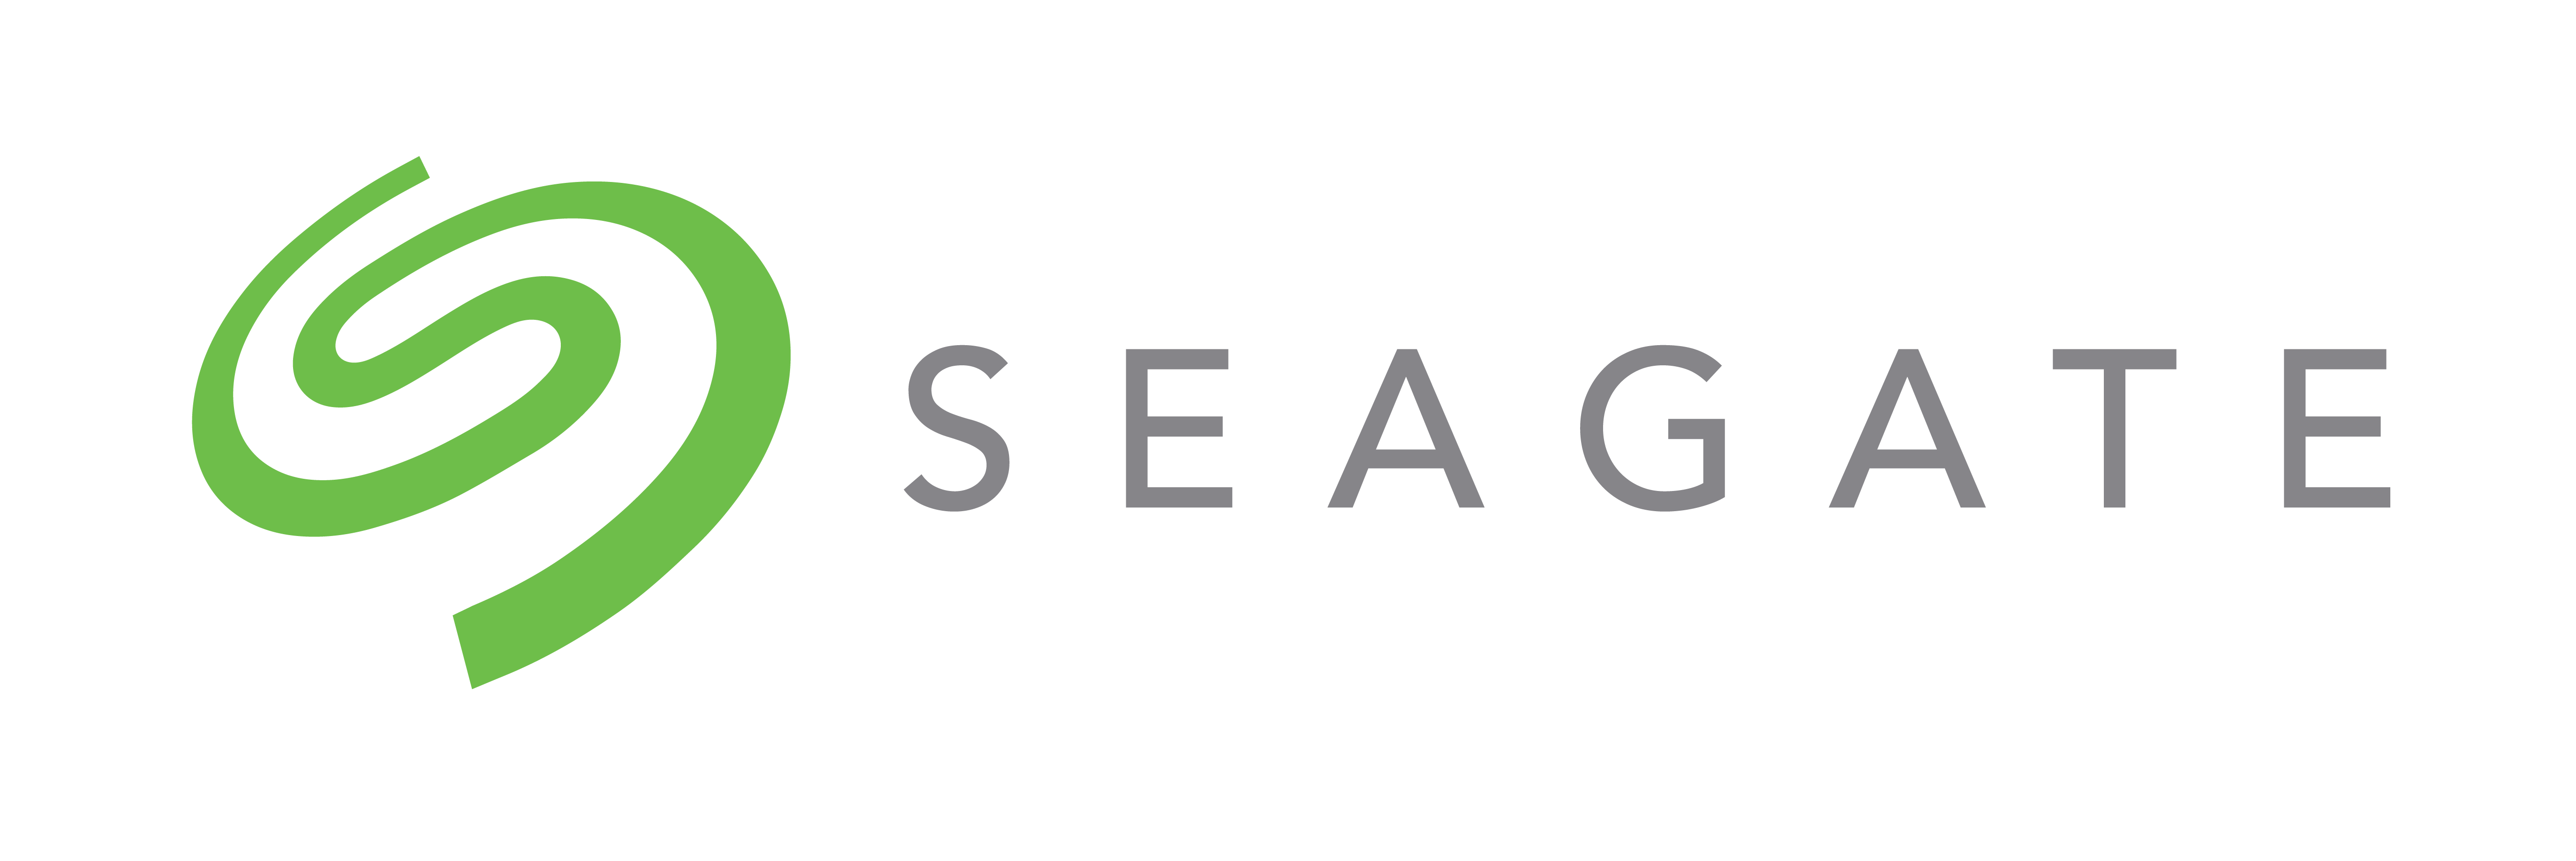 branding.seagate.png